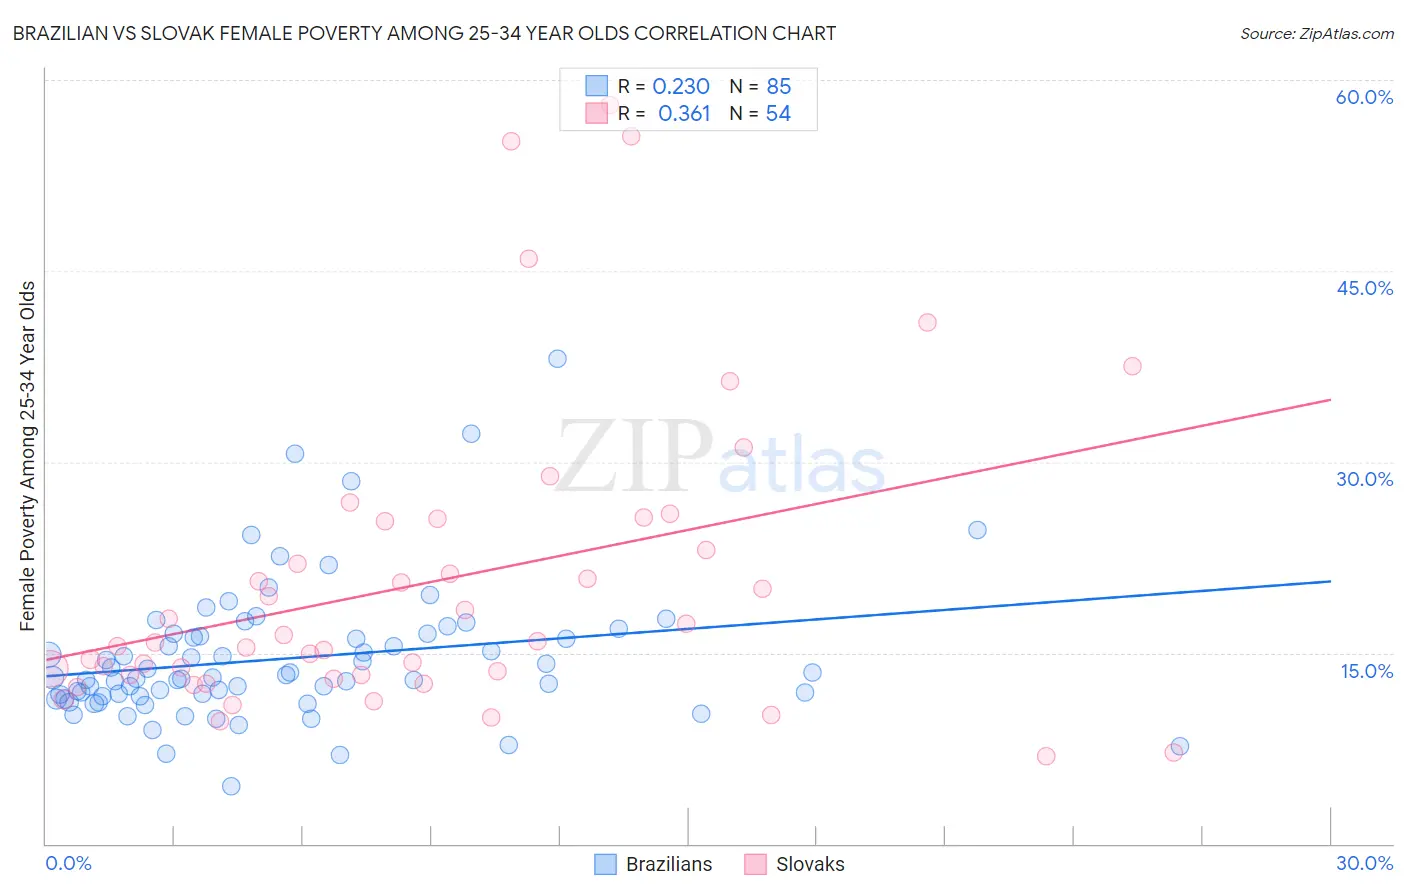 Brazilian vs Slovak Female Poverty Among 25-34 Year Olds